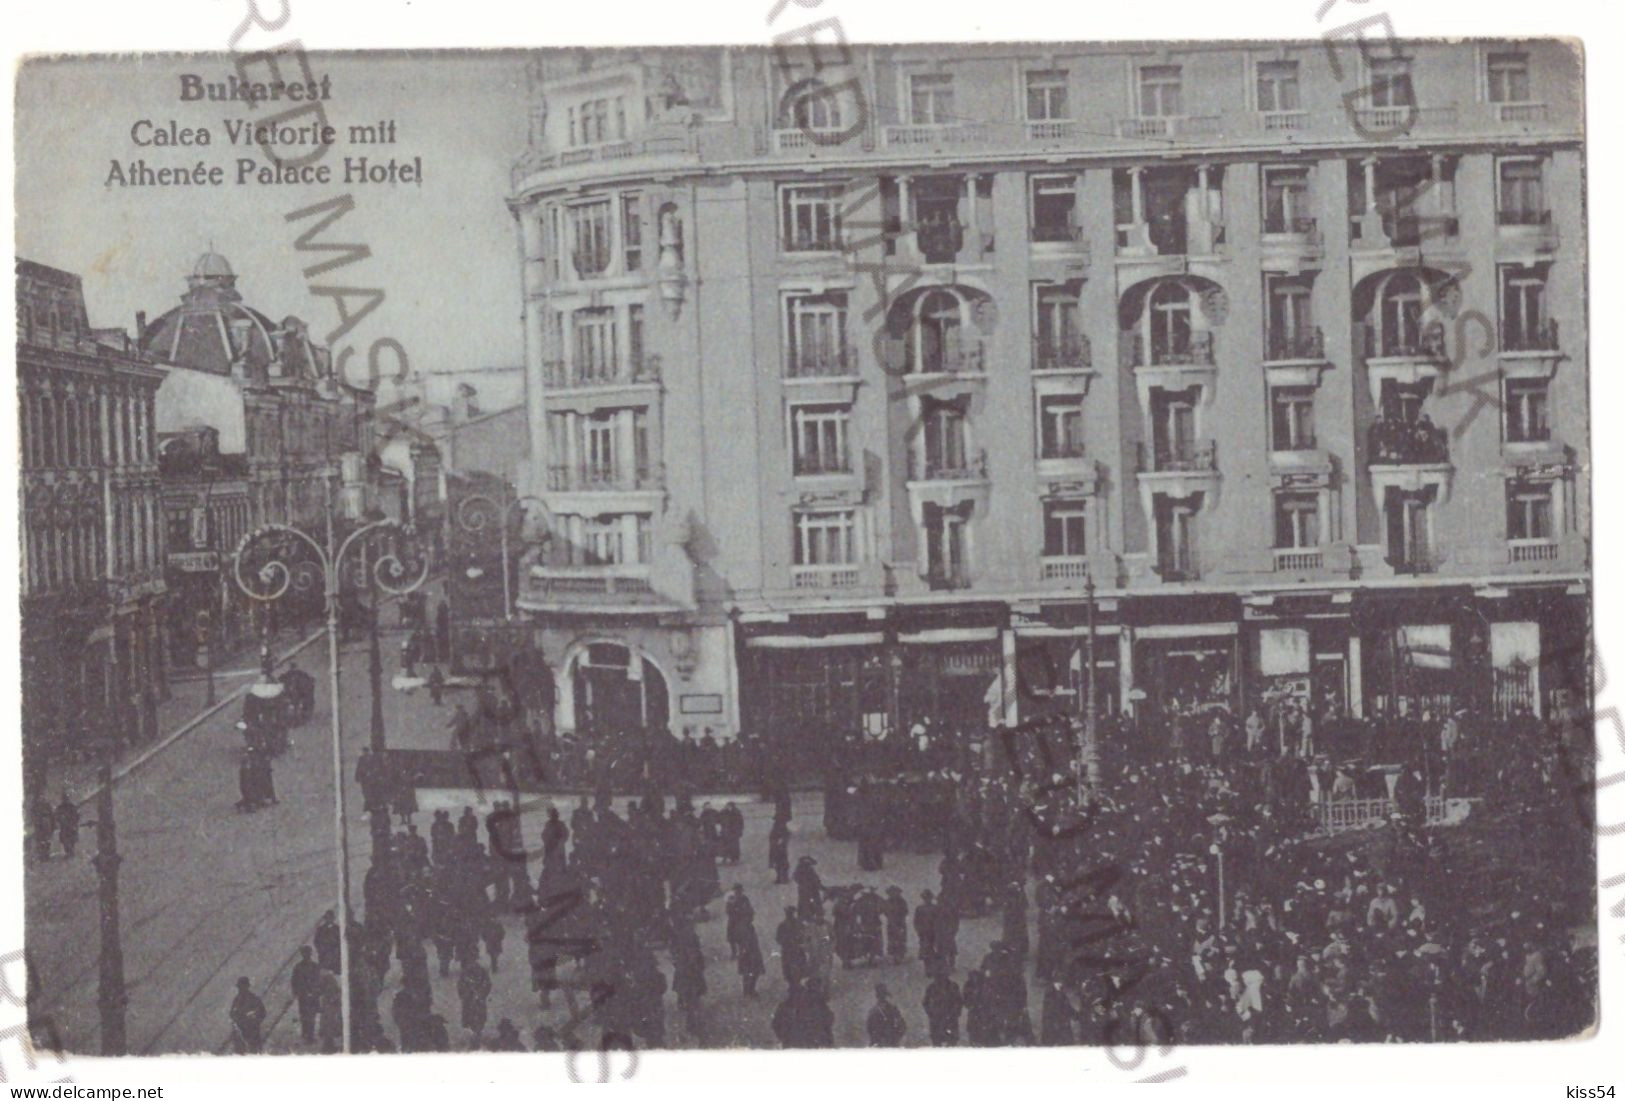 RO 47 - 20741 BUCURESTI, Victoriei Ave, Romania - Old Postcard - Used - 1927 - Rumänien